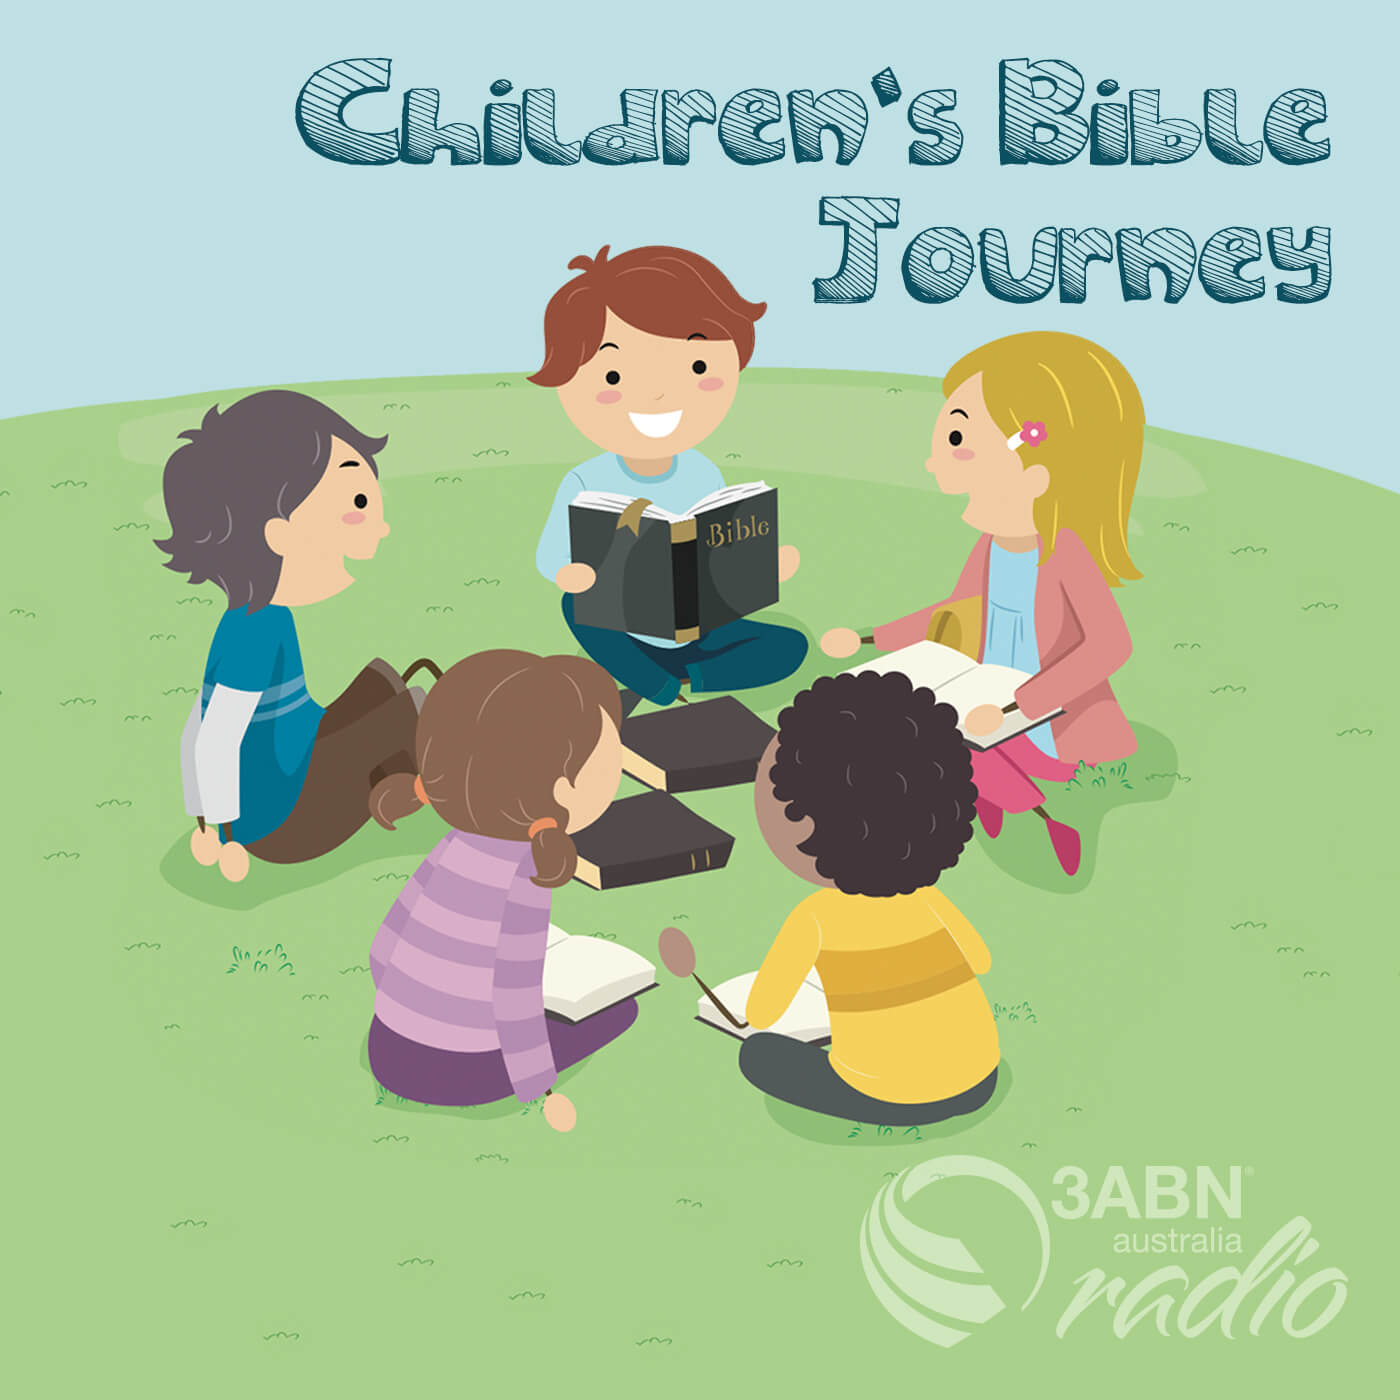 Children's Bible Journey - 2223